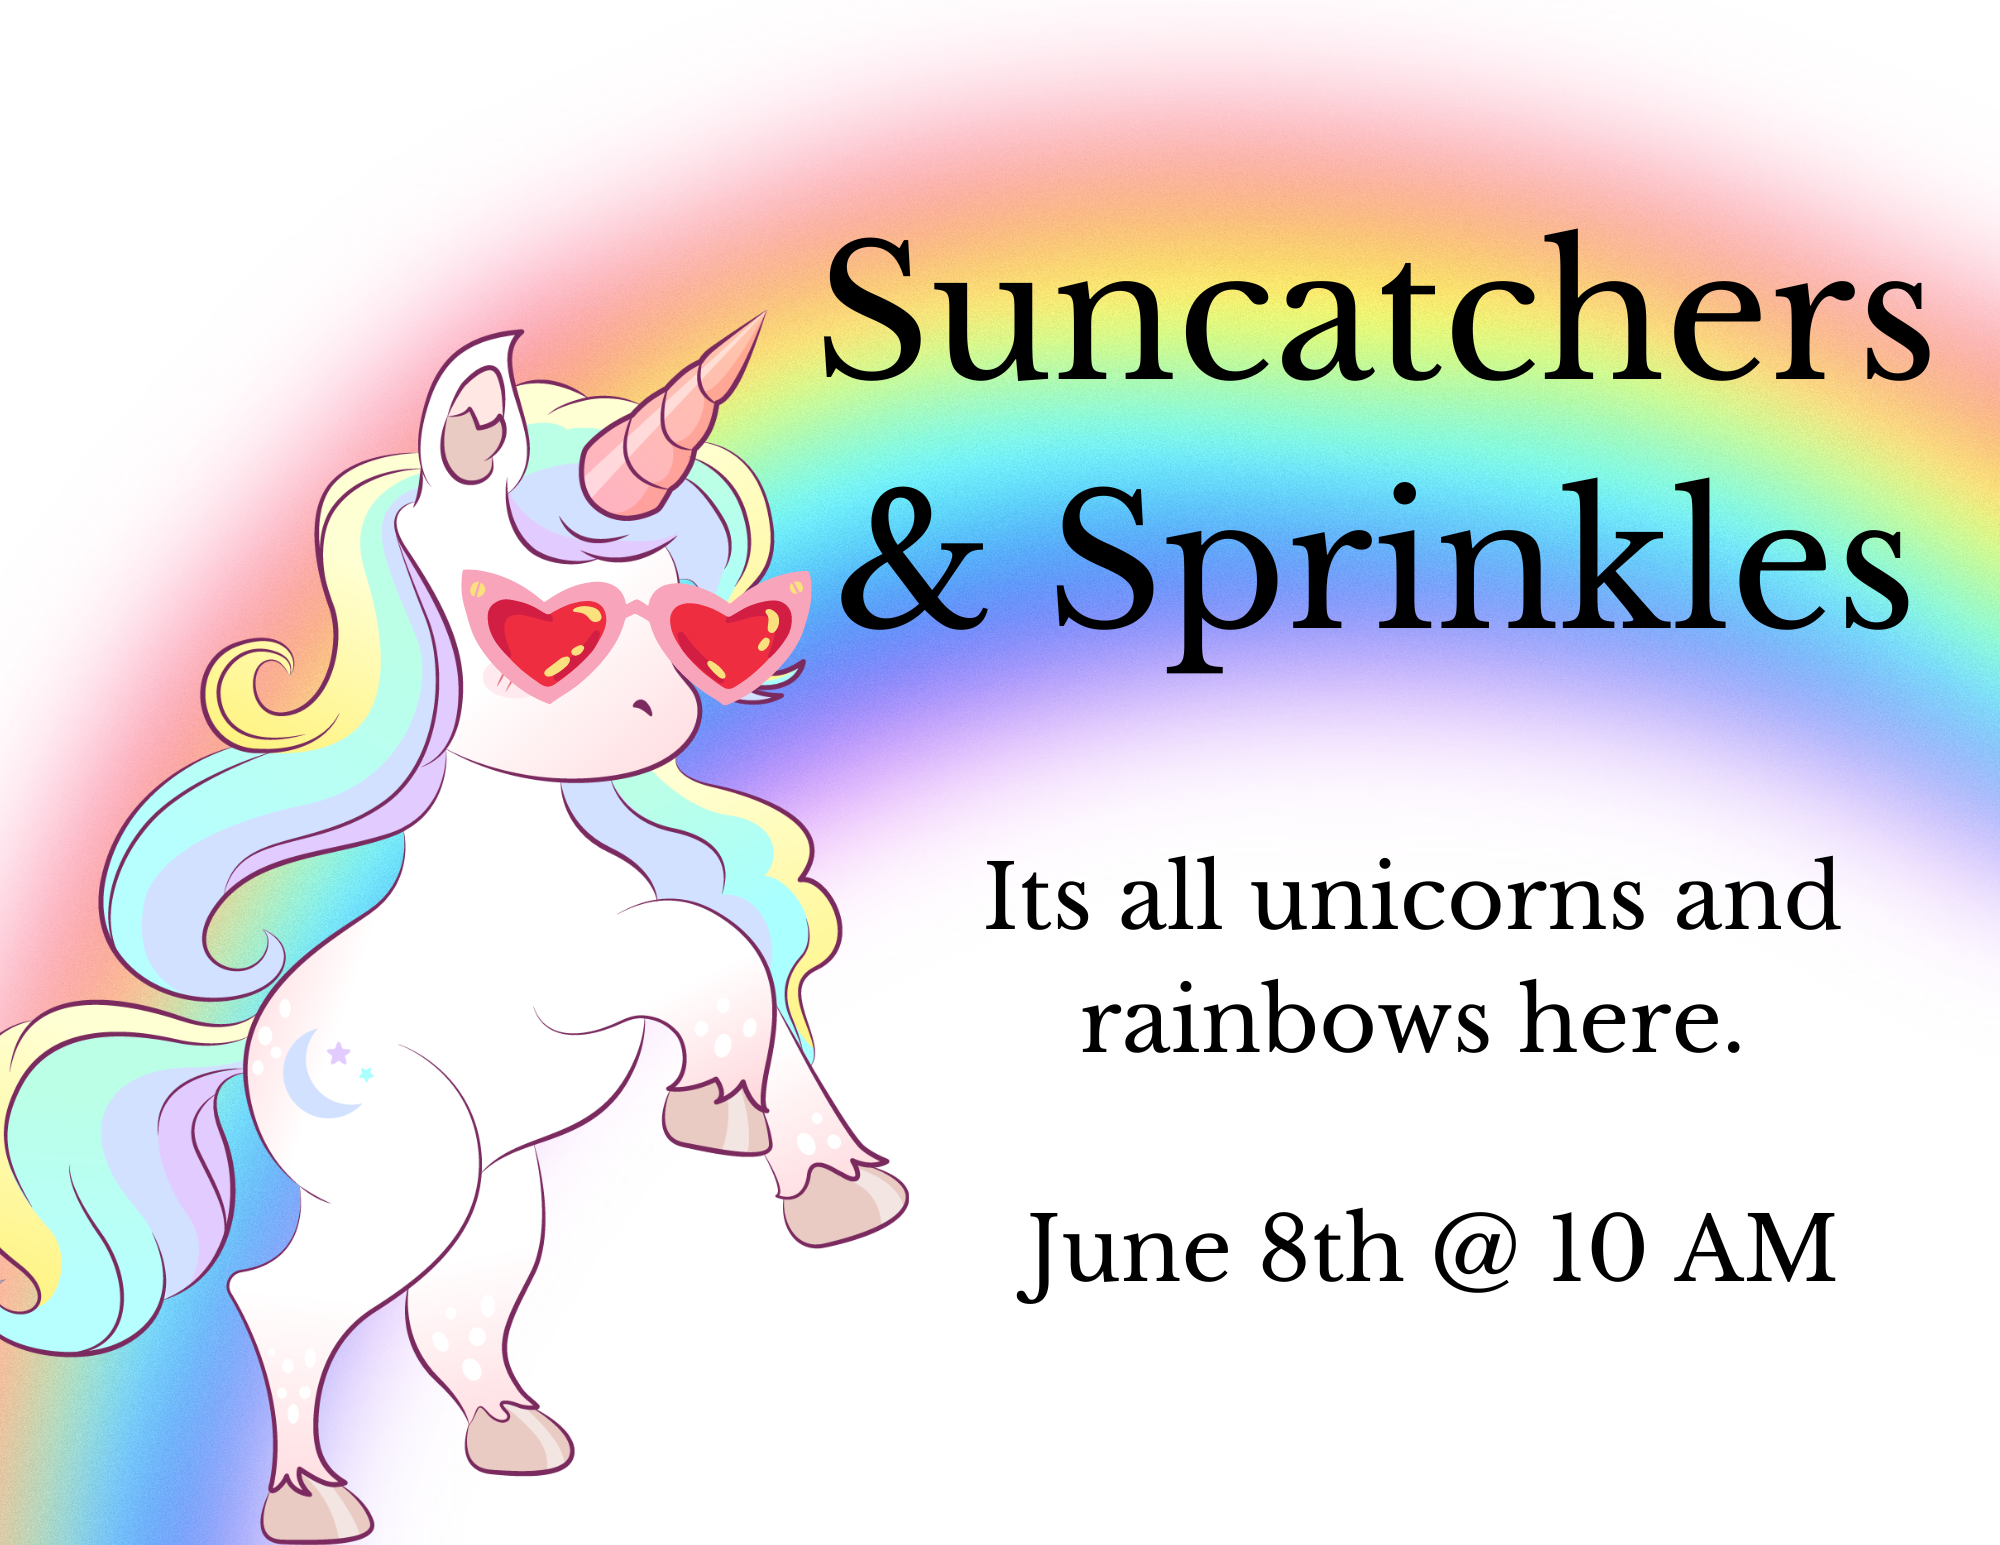 Unicorn in sunglasses over a rainbow background